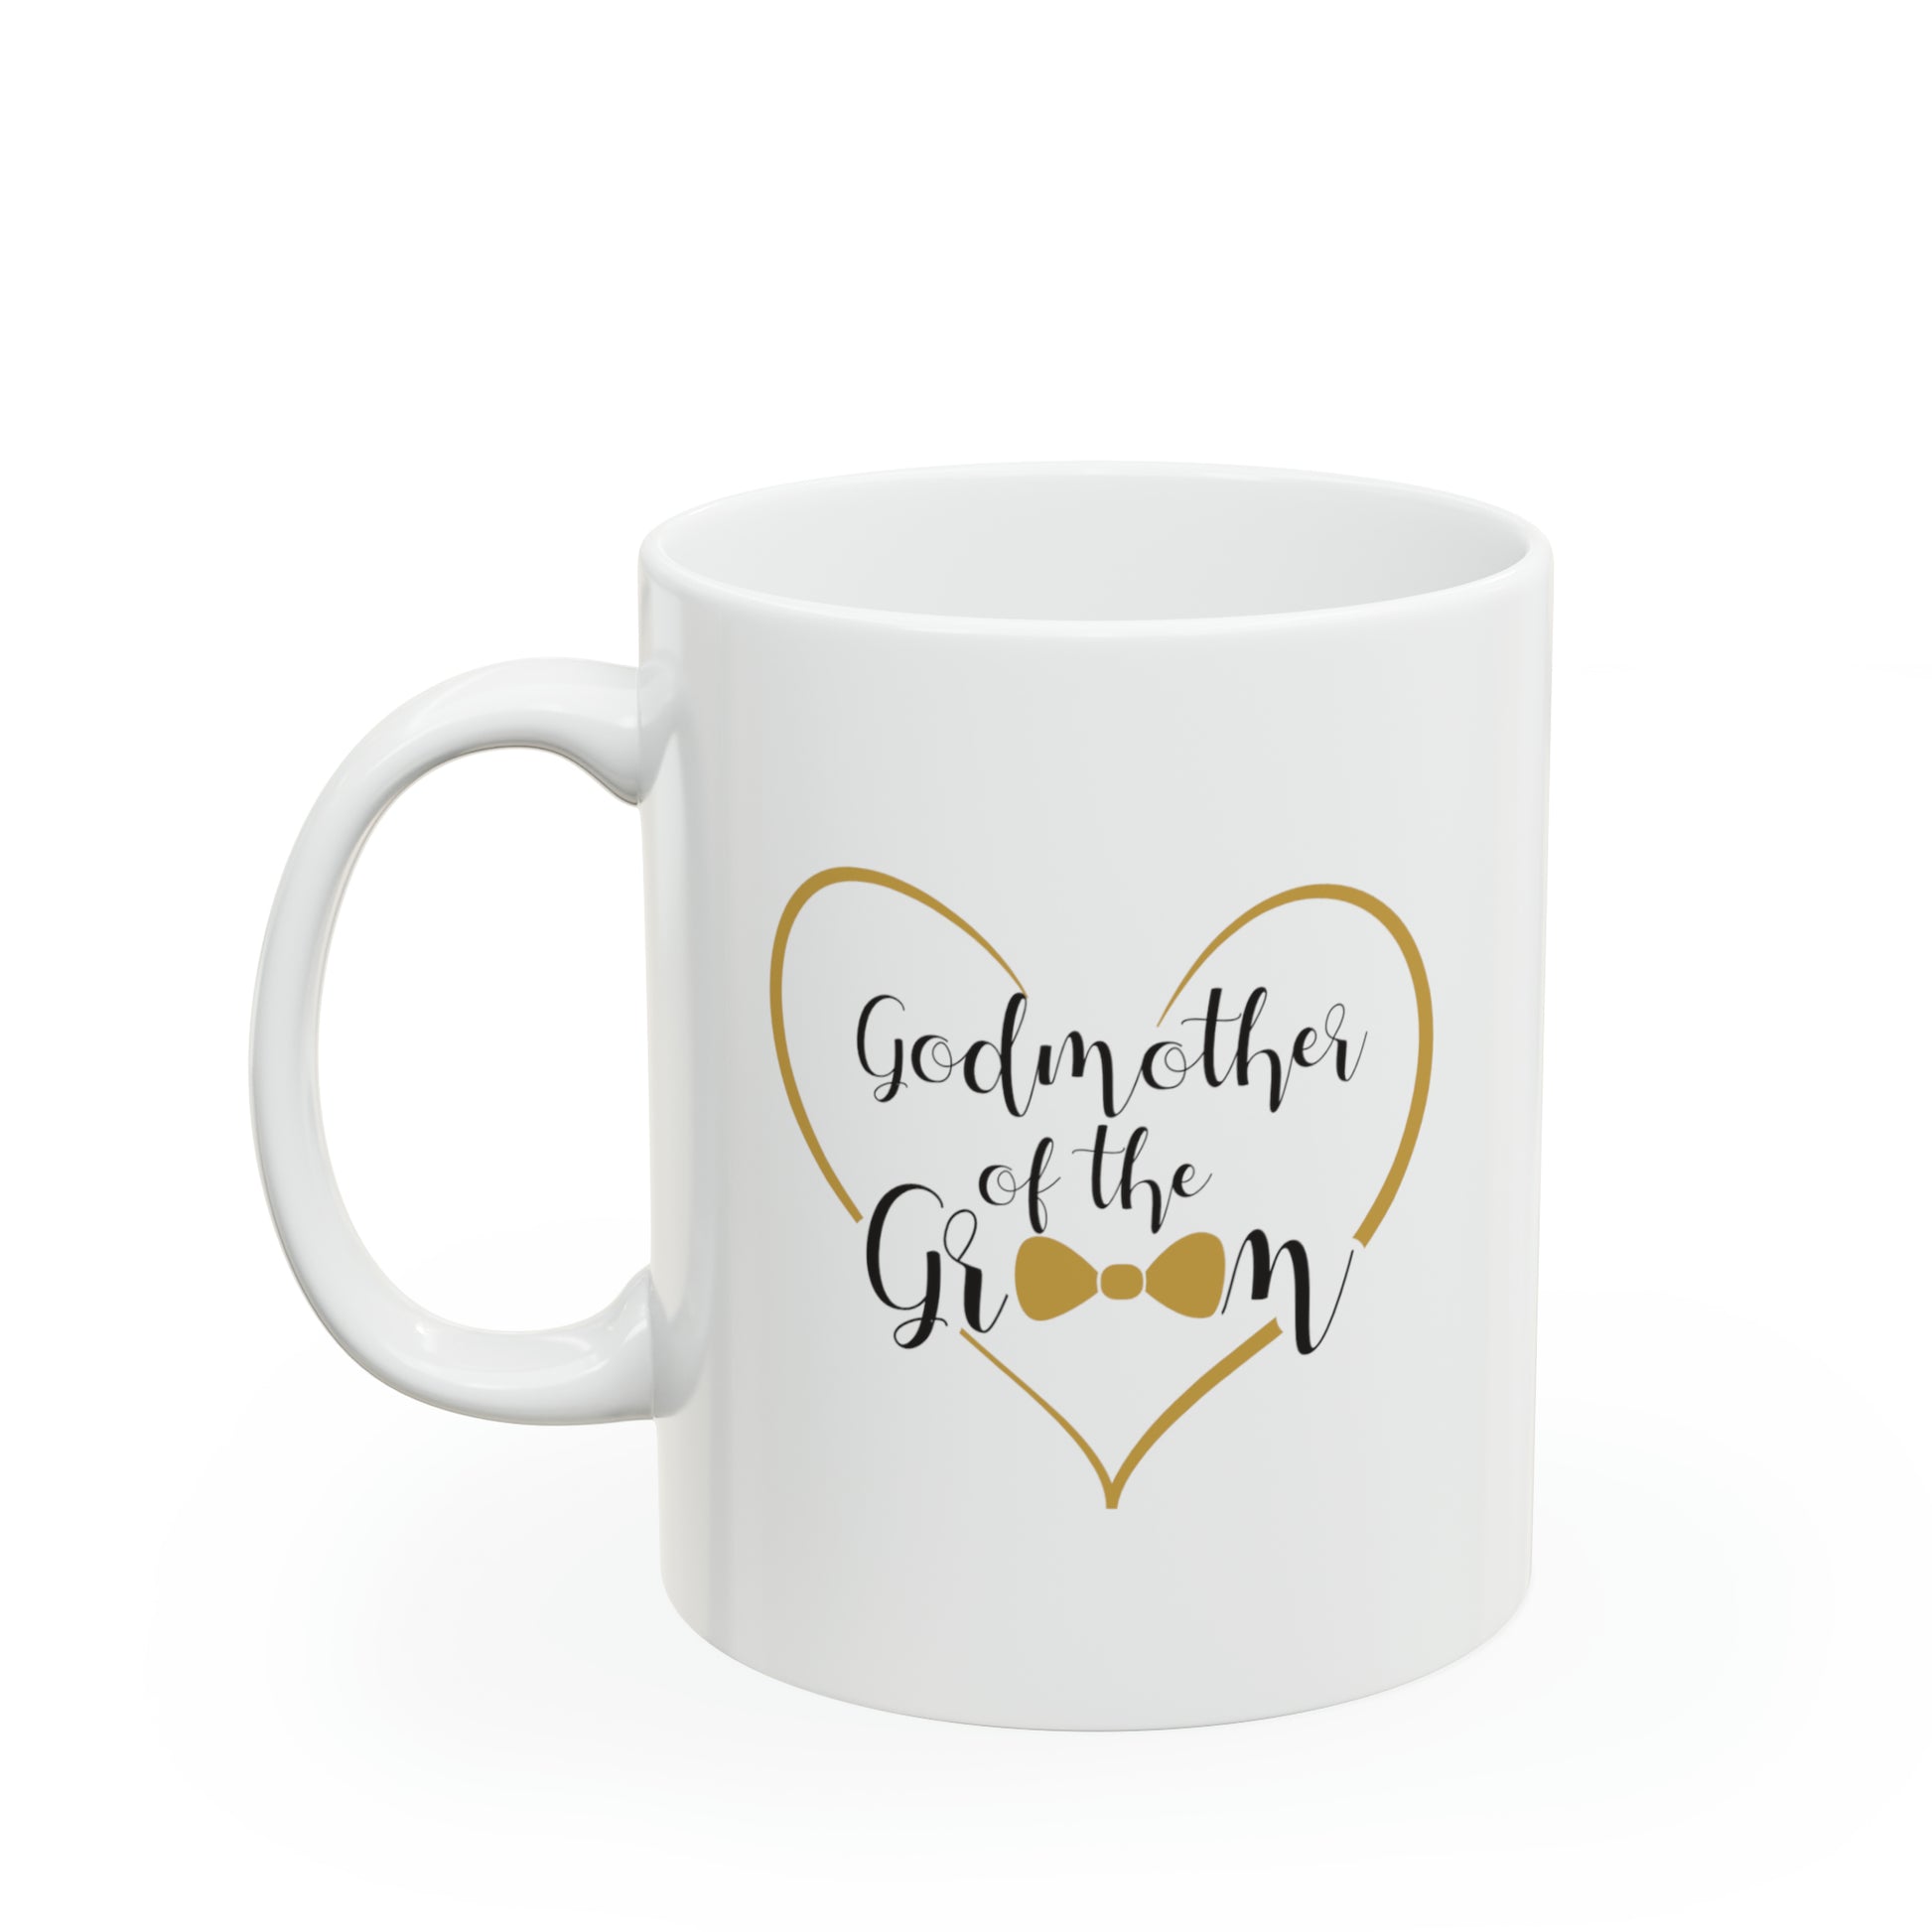 Godmother of the Groom Coffee Mug - Double Sided 11oz White Ceramic by TheGlassyLass.com